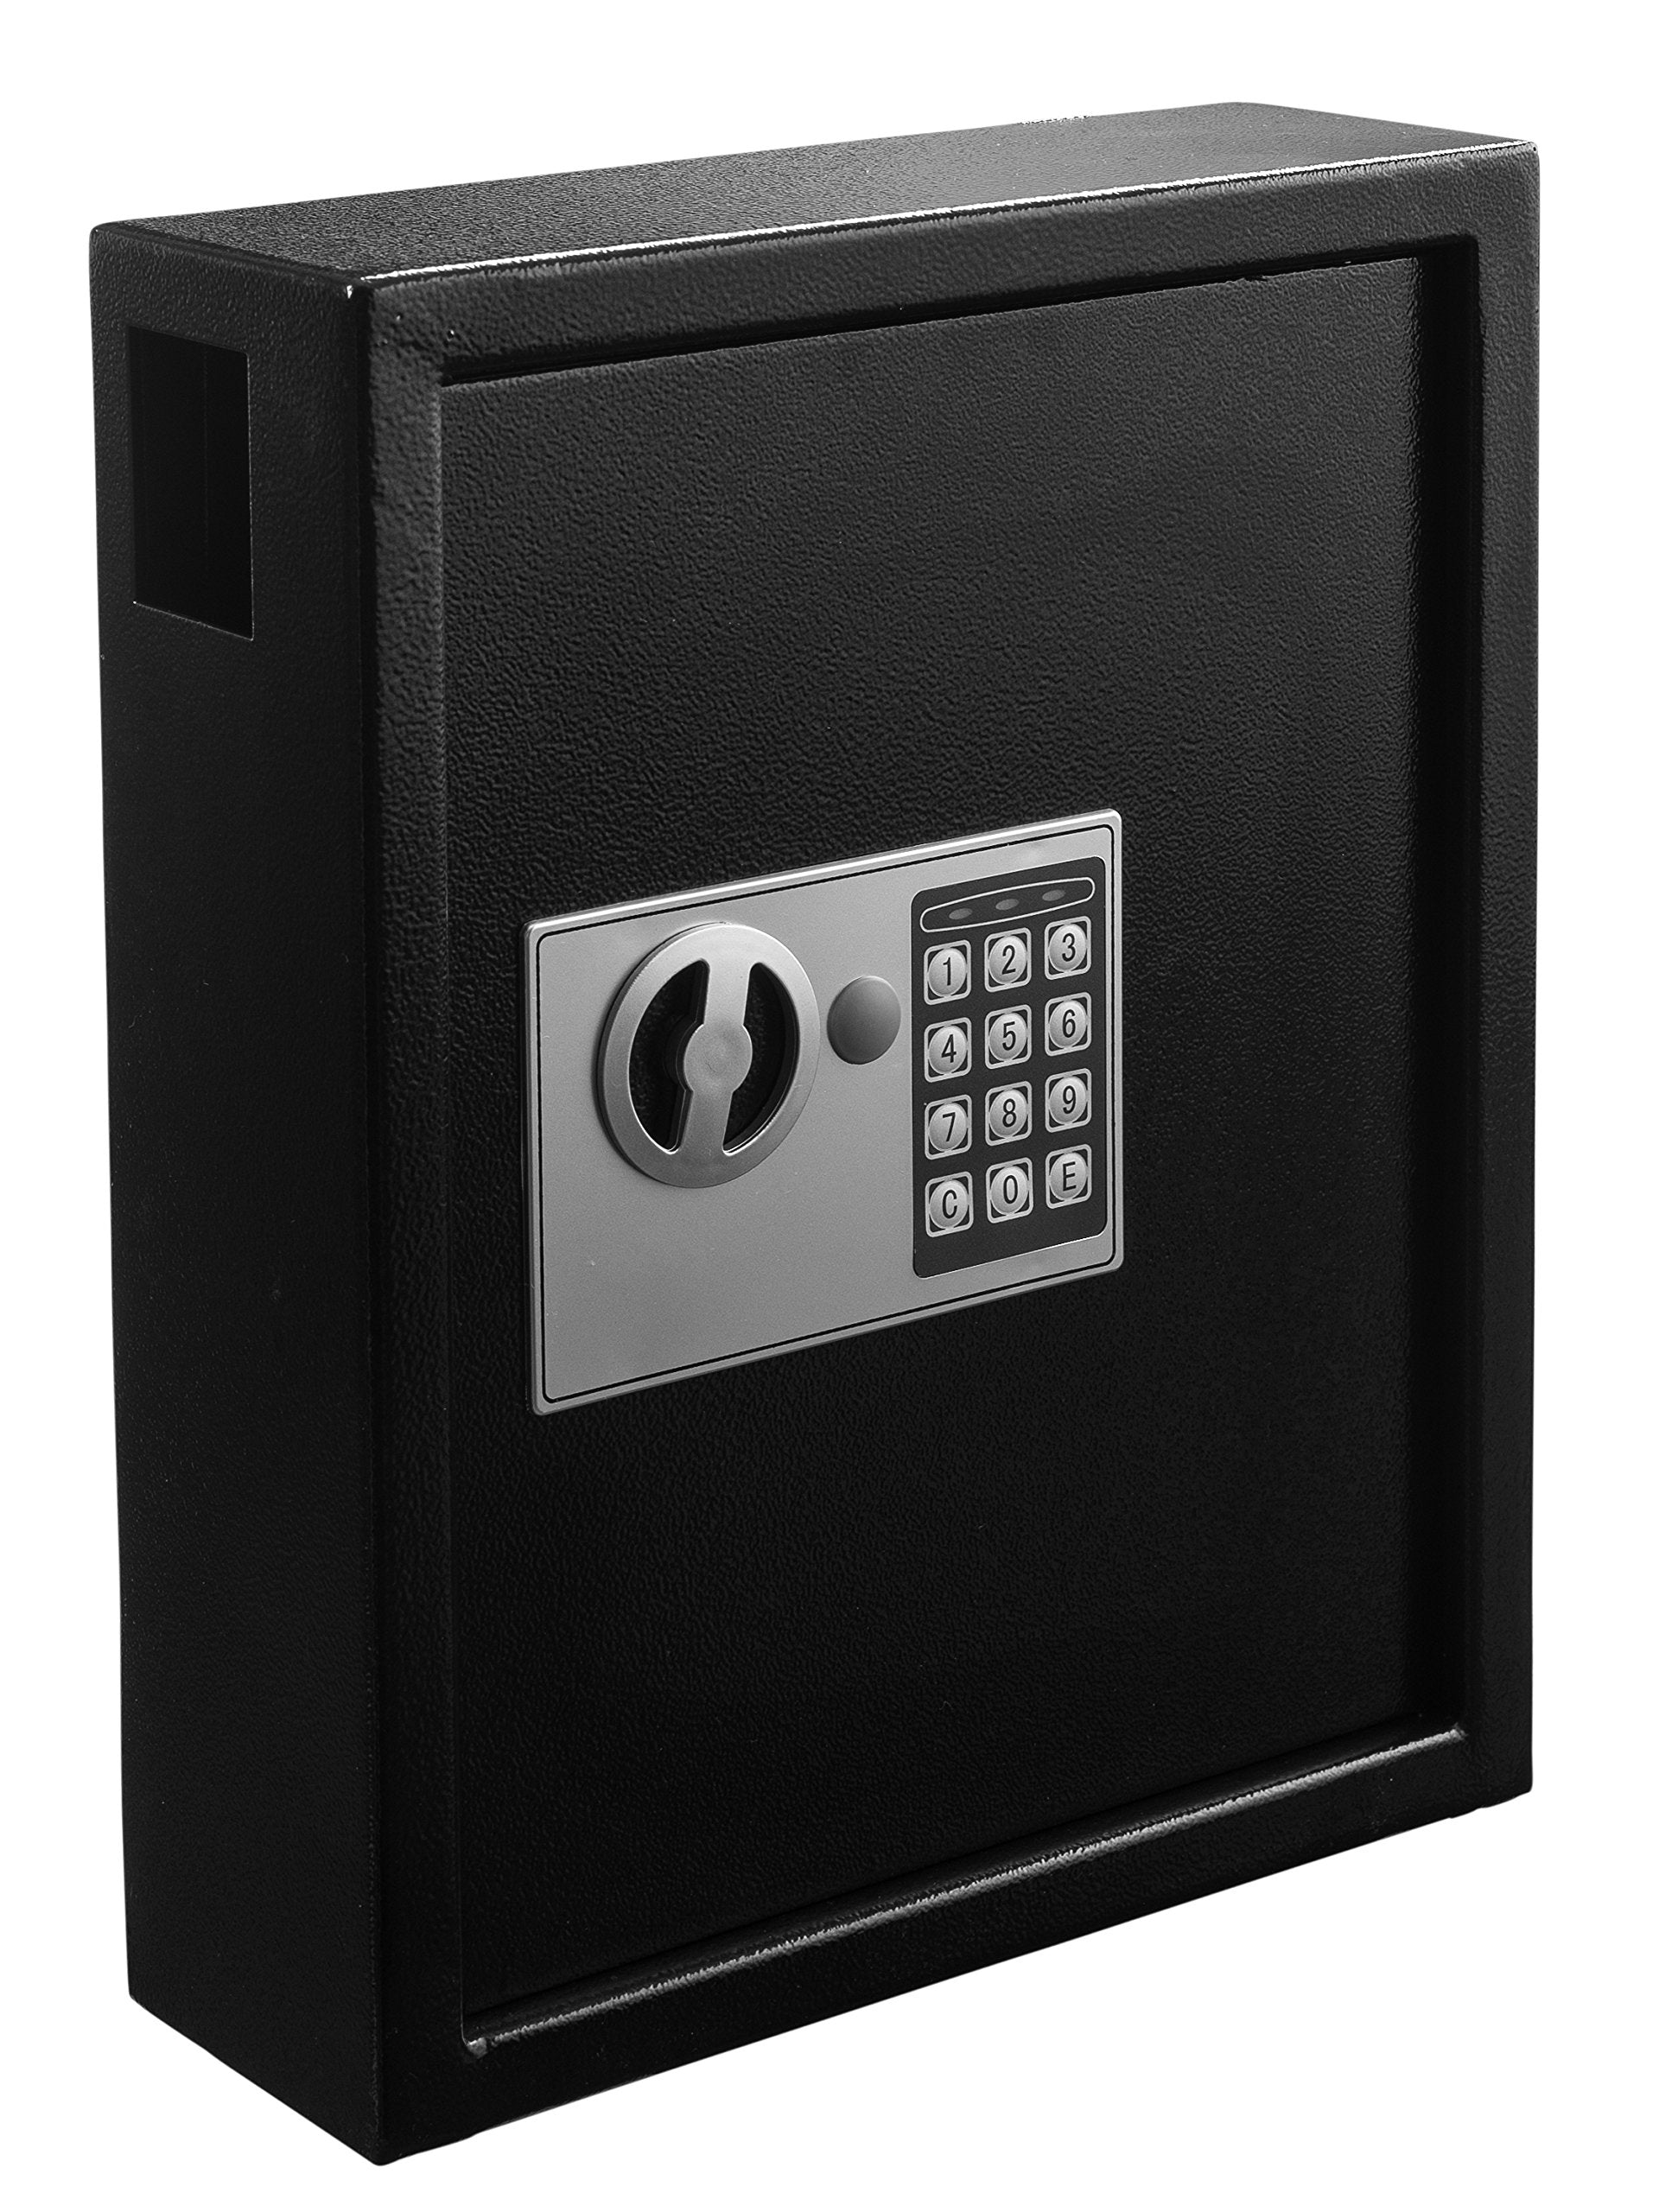 AdirOffice 40 Keys Cabinet with Digital Lock - Electronic Key Safe - Pin Code Keyless Storage Box for Keys - Secure Steel Lockbox - Scratch Resistant Powder Coated - Wall Anchor  - Like New